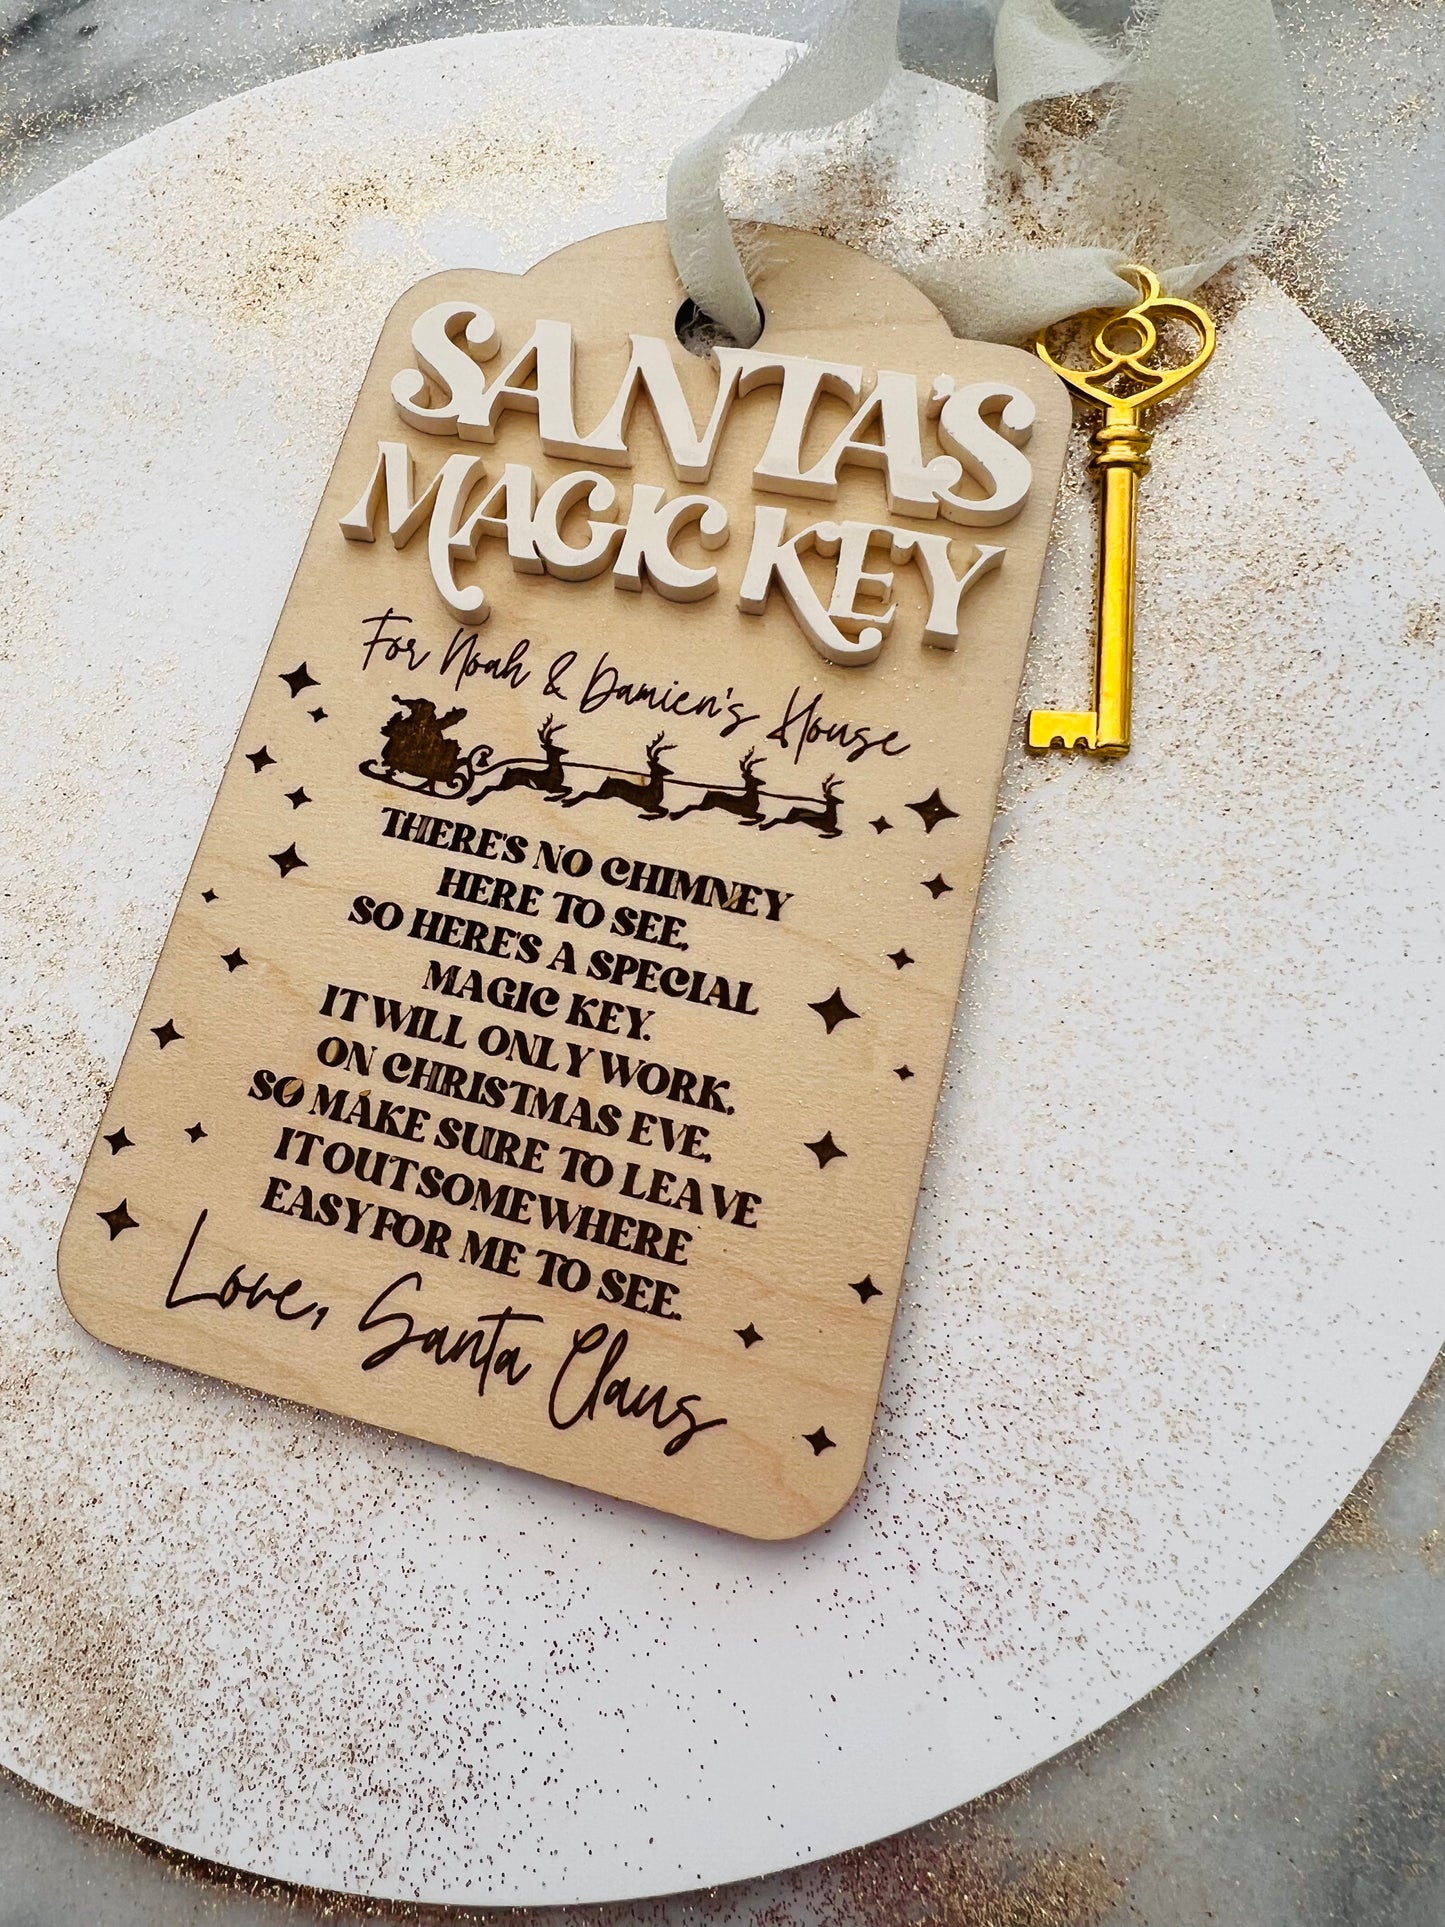 Santa’s magic key